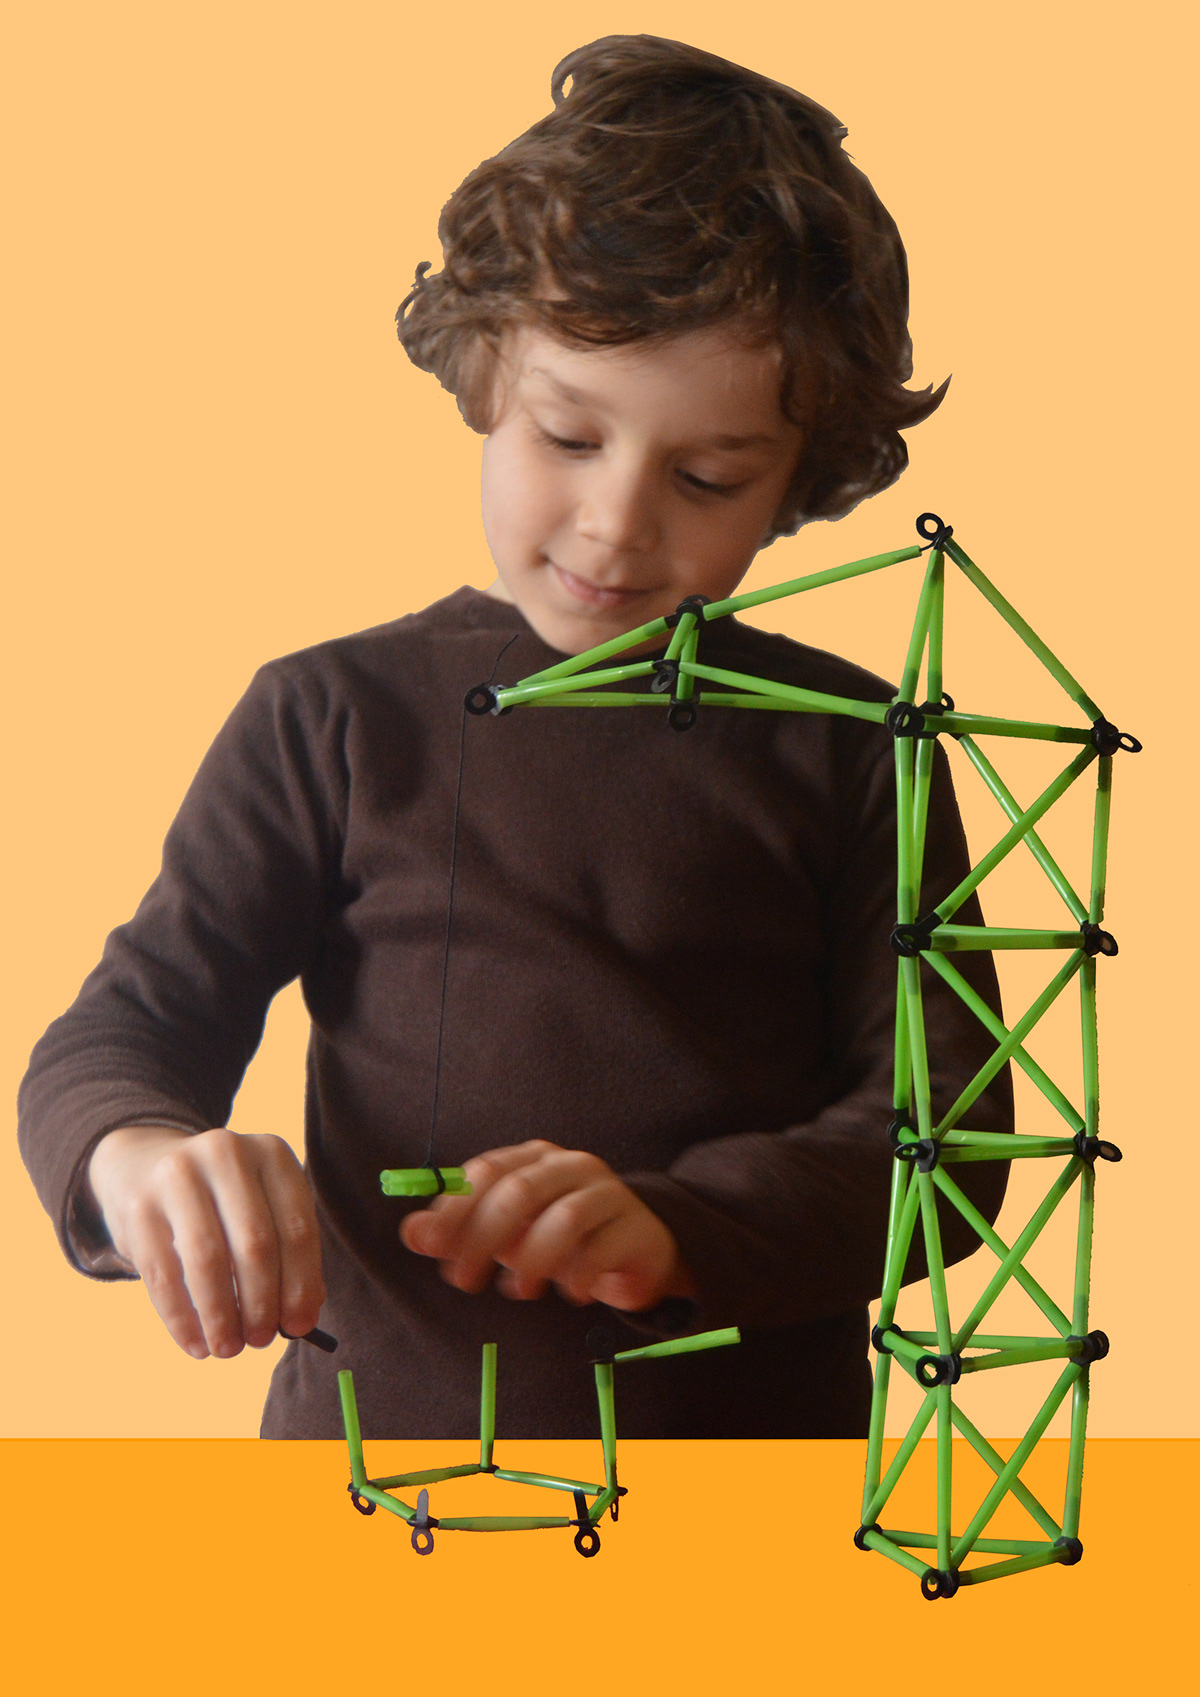 Architectural Toys toy children play compal palhinhas straws